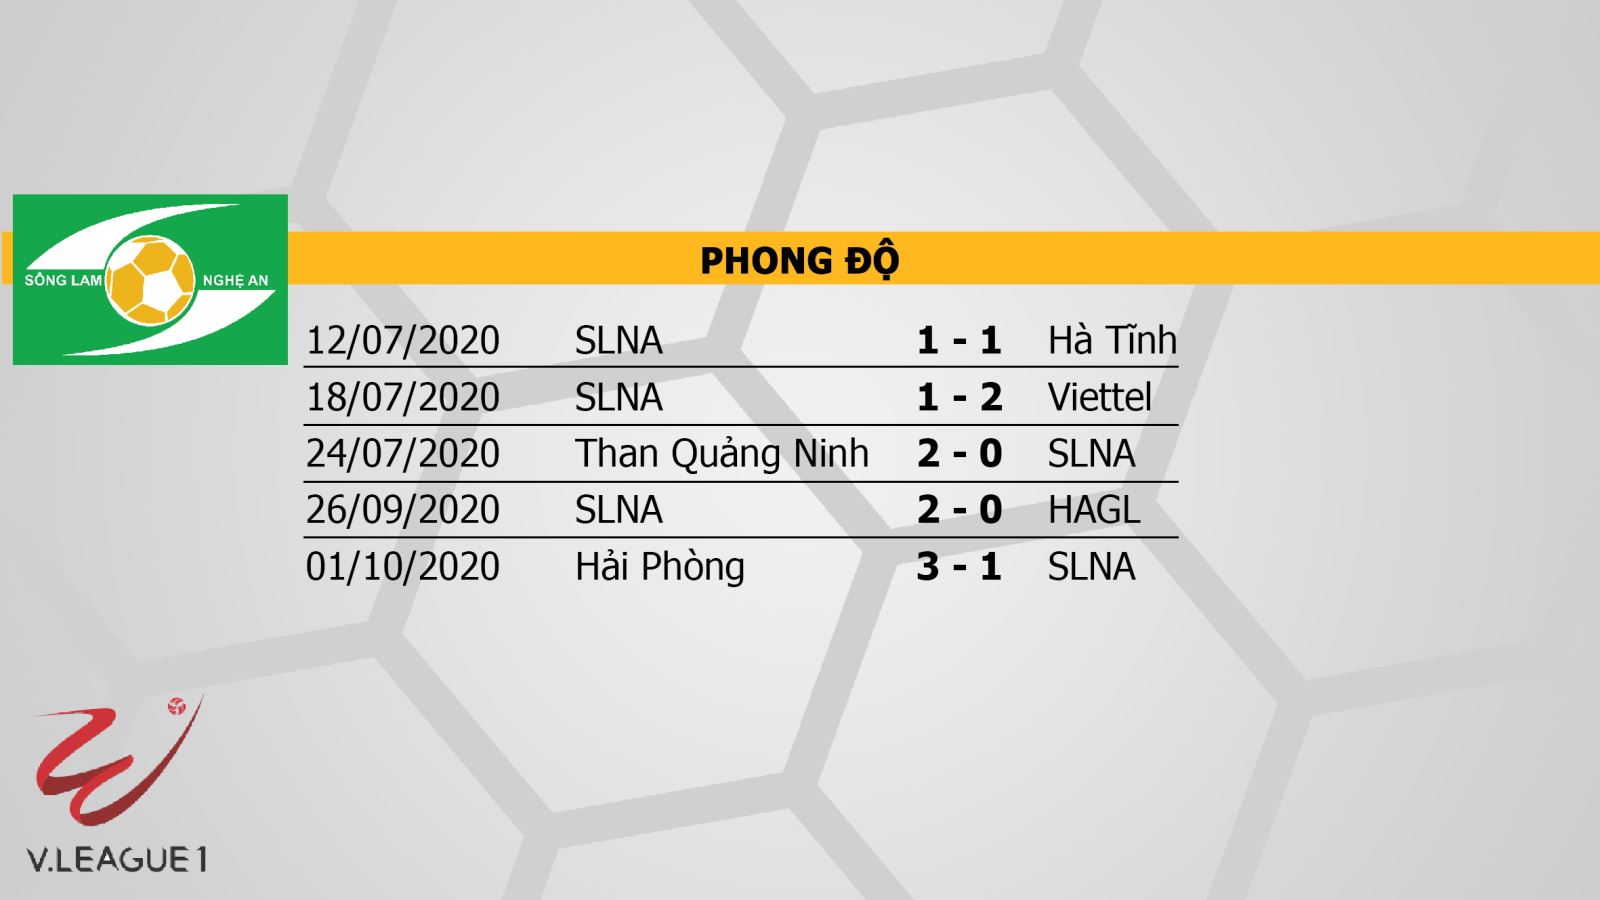 SLNA vs Quảng Nam, SLNA, Quảng Nam, bóng đá, nhận định bóng đá bóng đá, nhận định bóng đá SLNA vs Quảng Nam, trực tiếp SLNA vs Quảng Nam, nhận định SLNA vs Quảng Nam